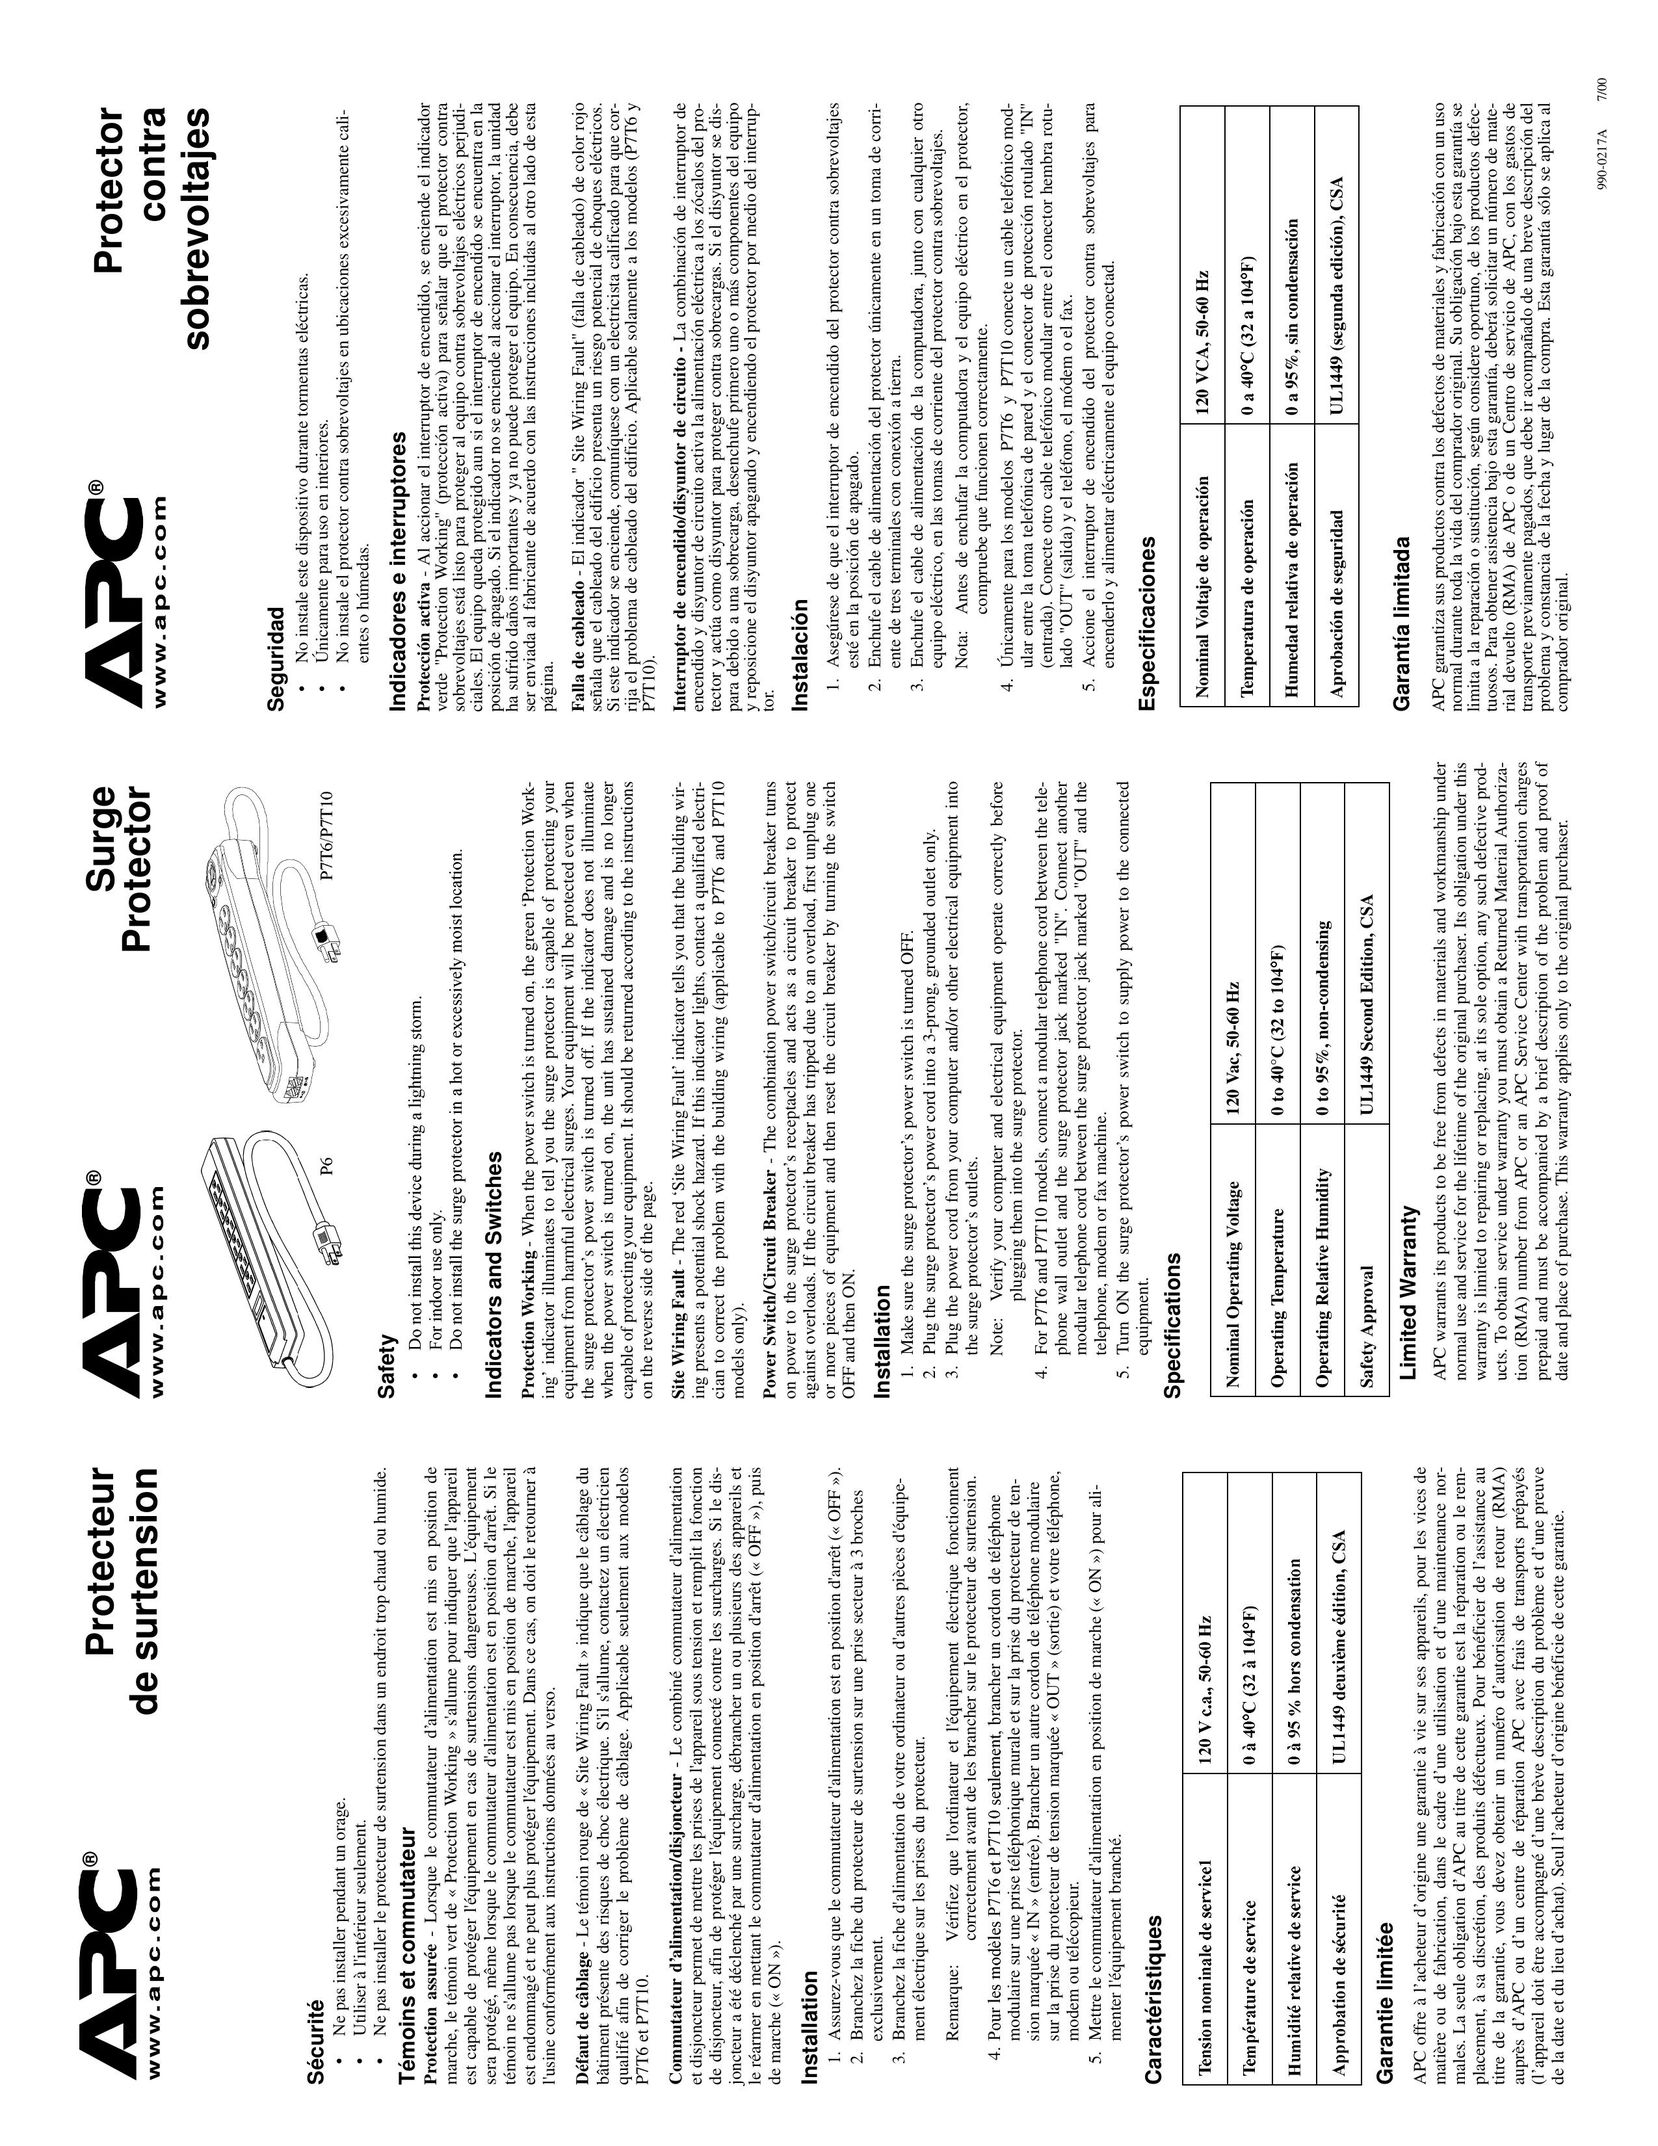 APC 990 0217A7 00 Surge Protector User Manual